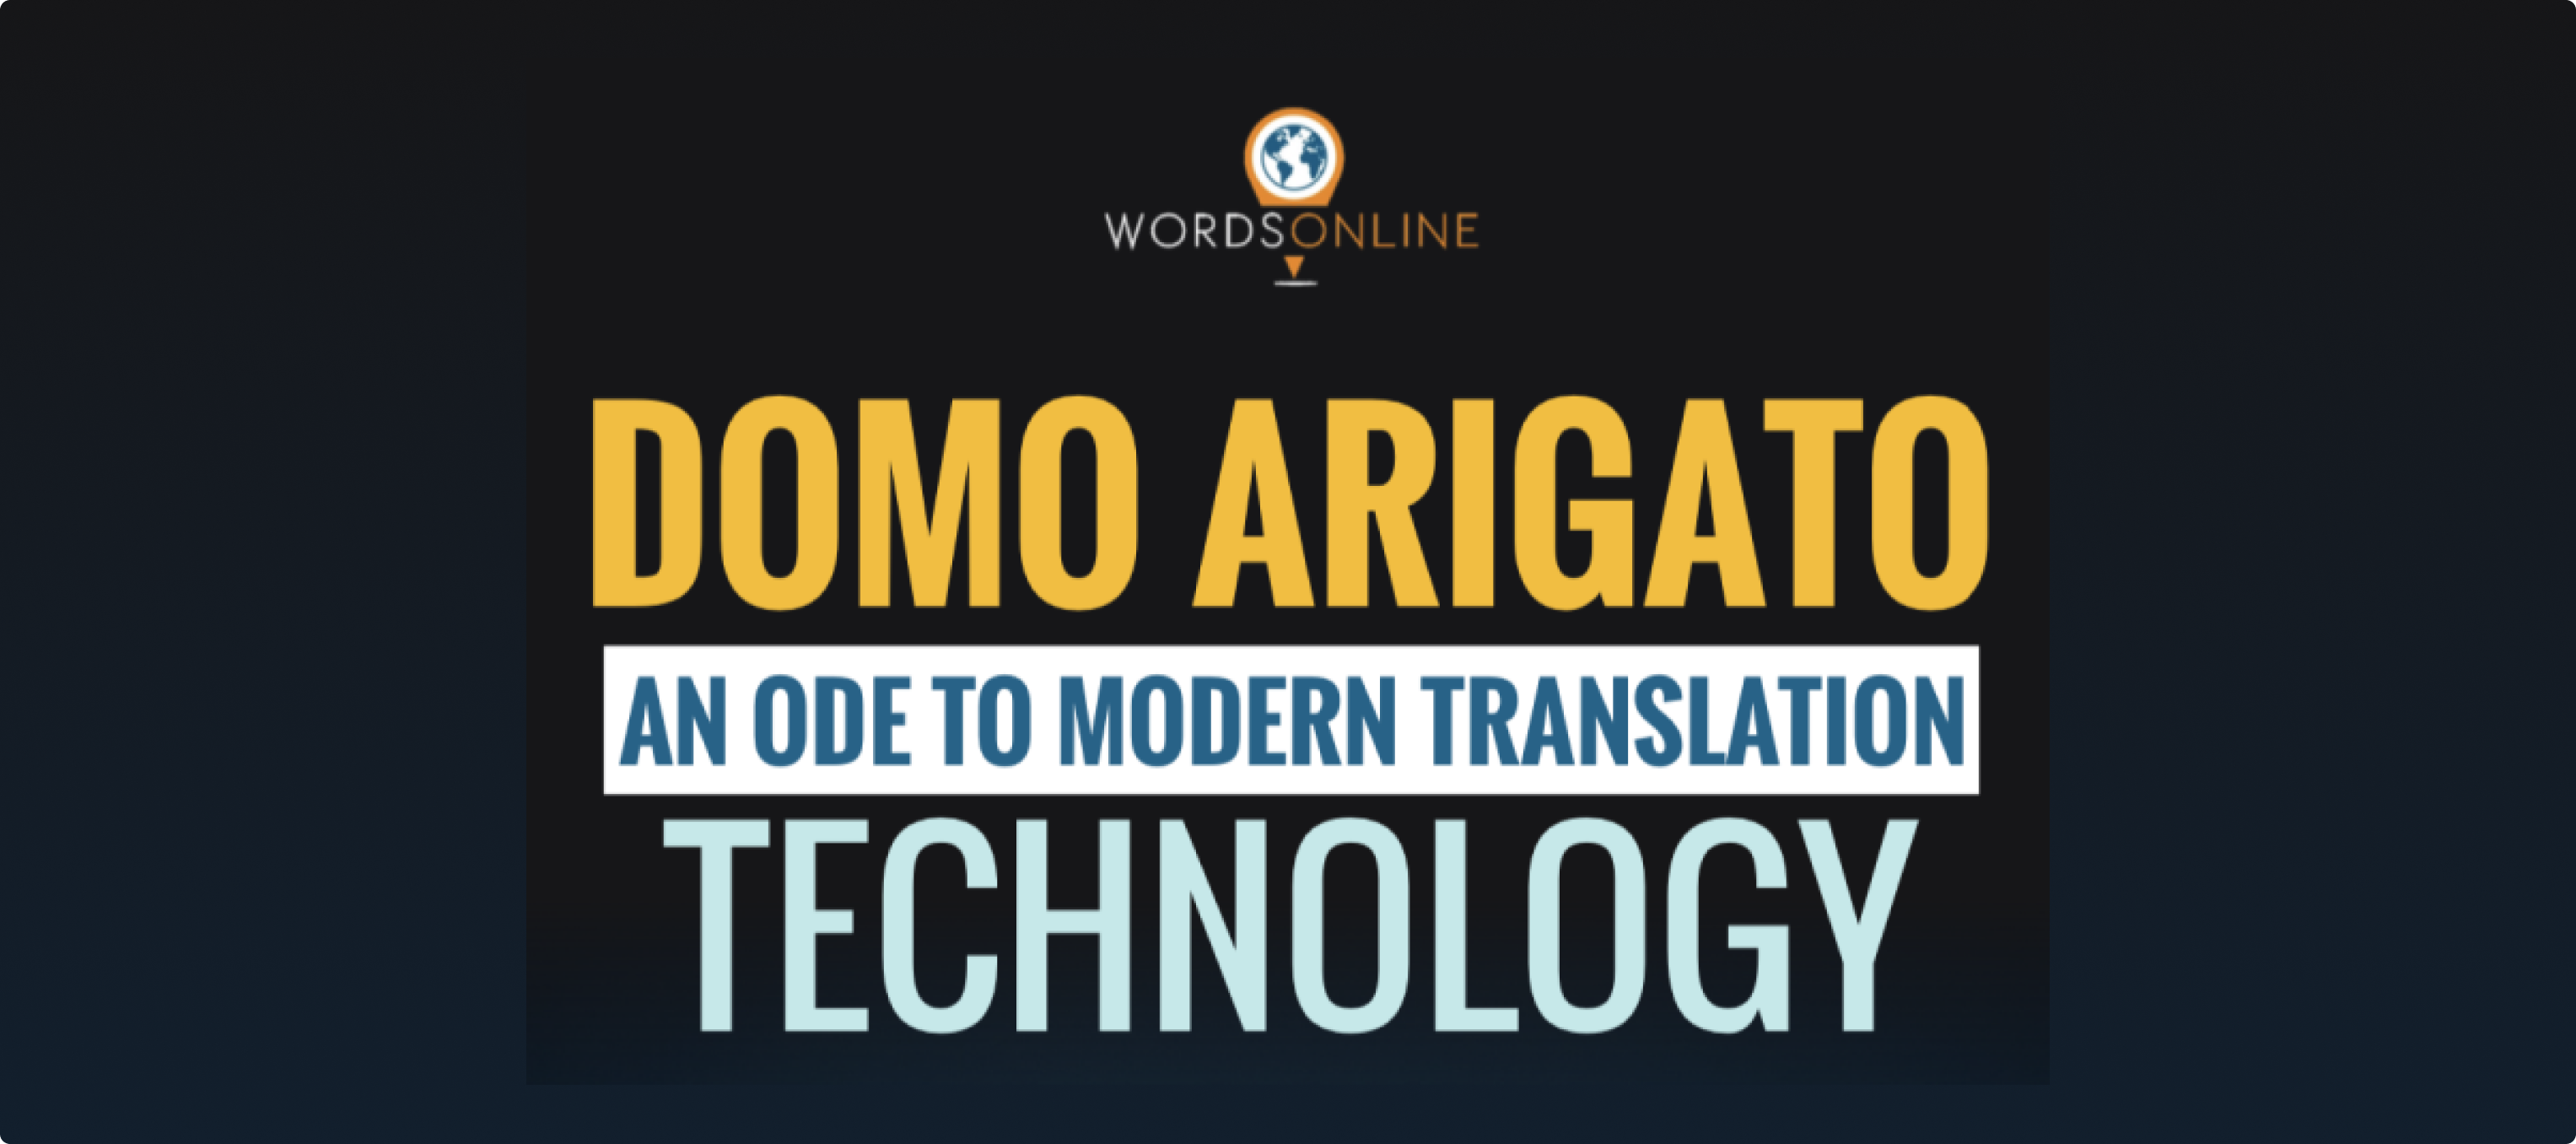 Domo Arigato - AI and terminology explained